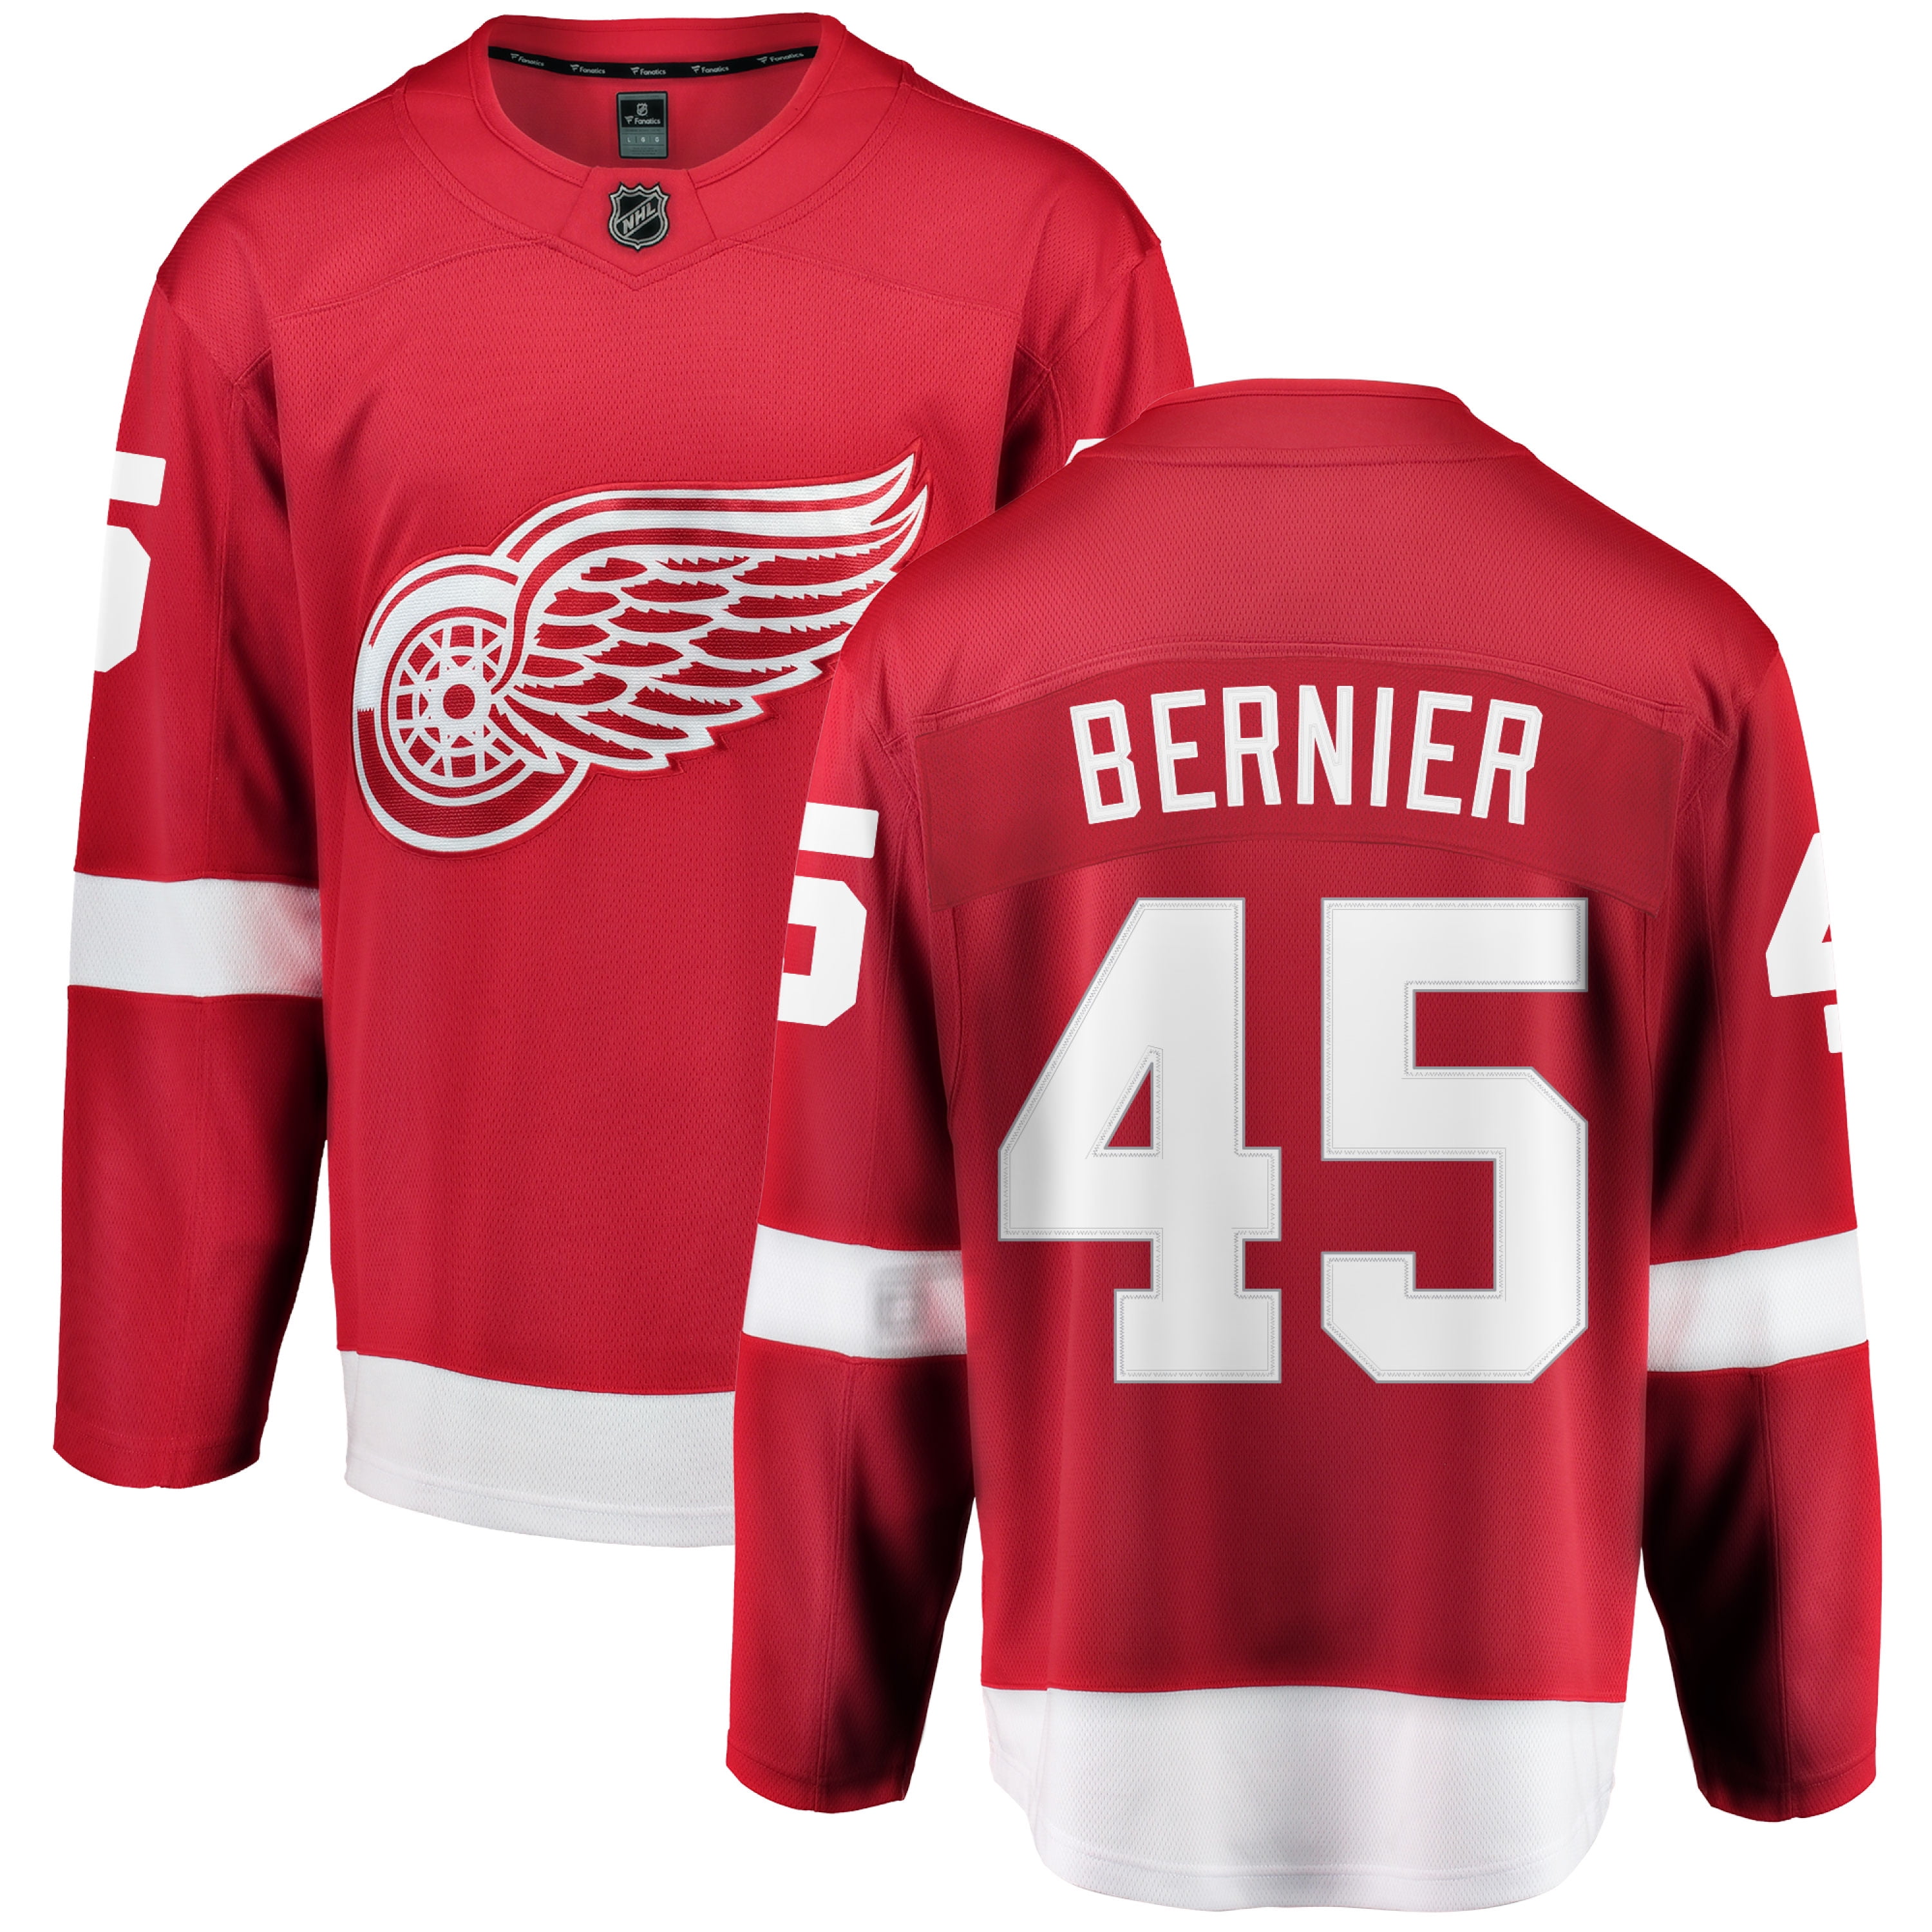 Jonathan Bernier Detroit Red Wings NHL 